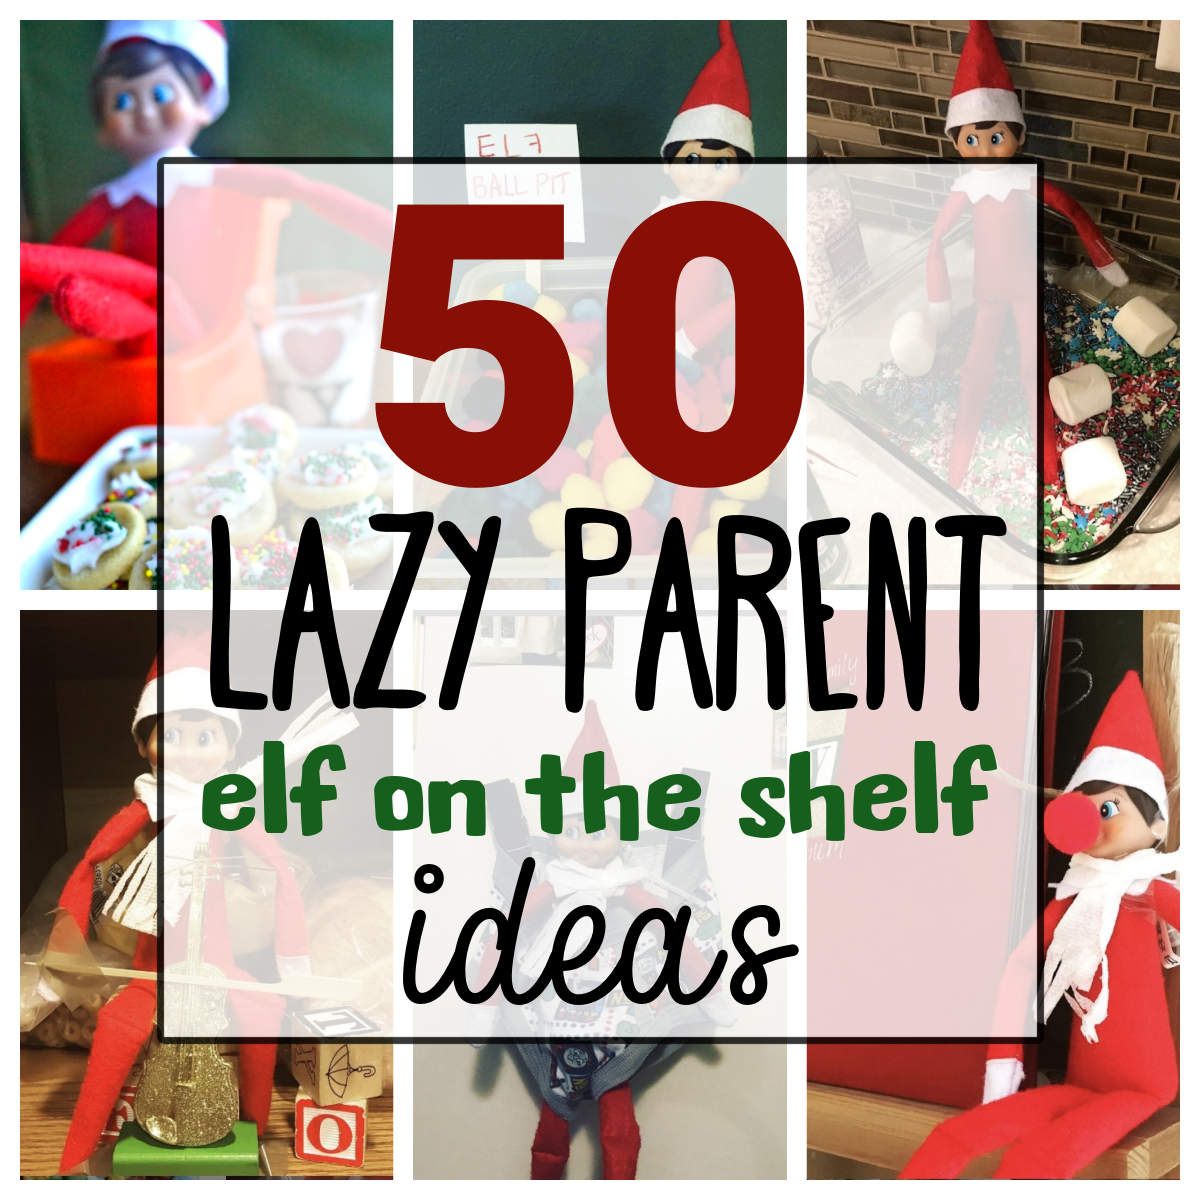 https://makethebestofeverything.com/wp-content/uploads/2021/12/lazy-parent-elf-on-shelf.png